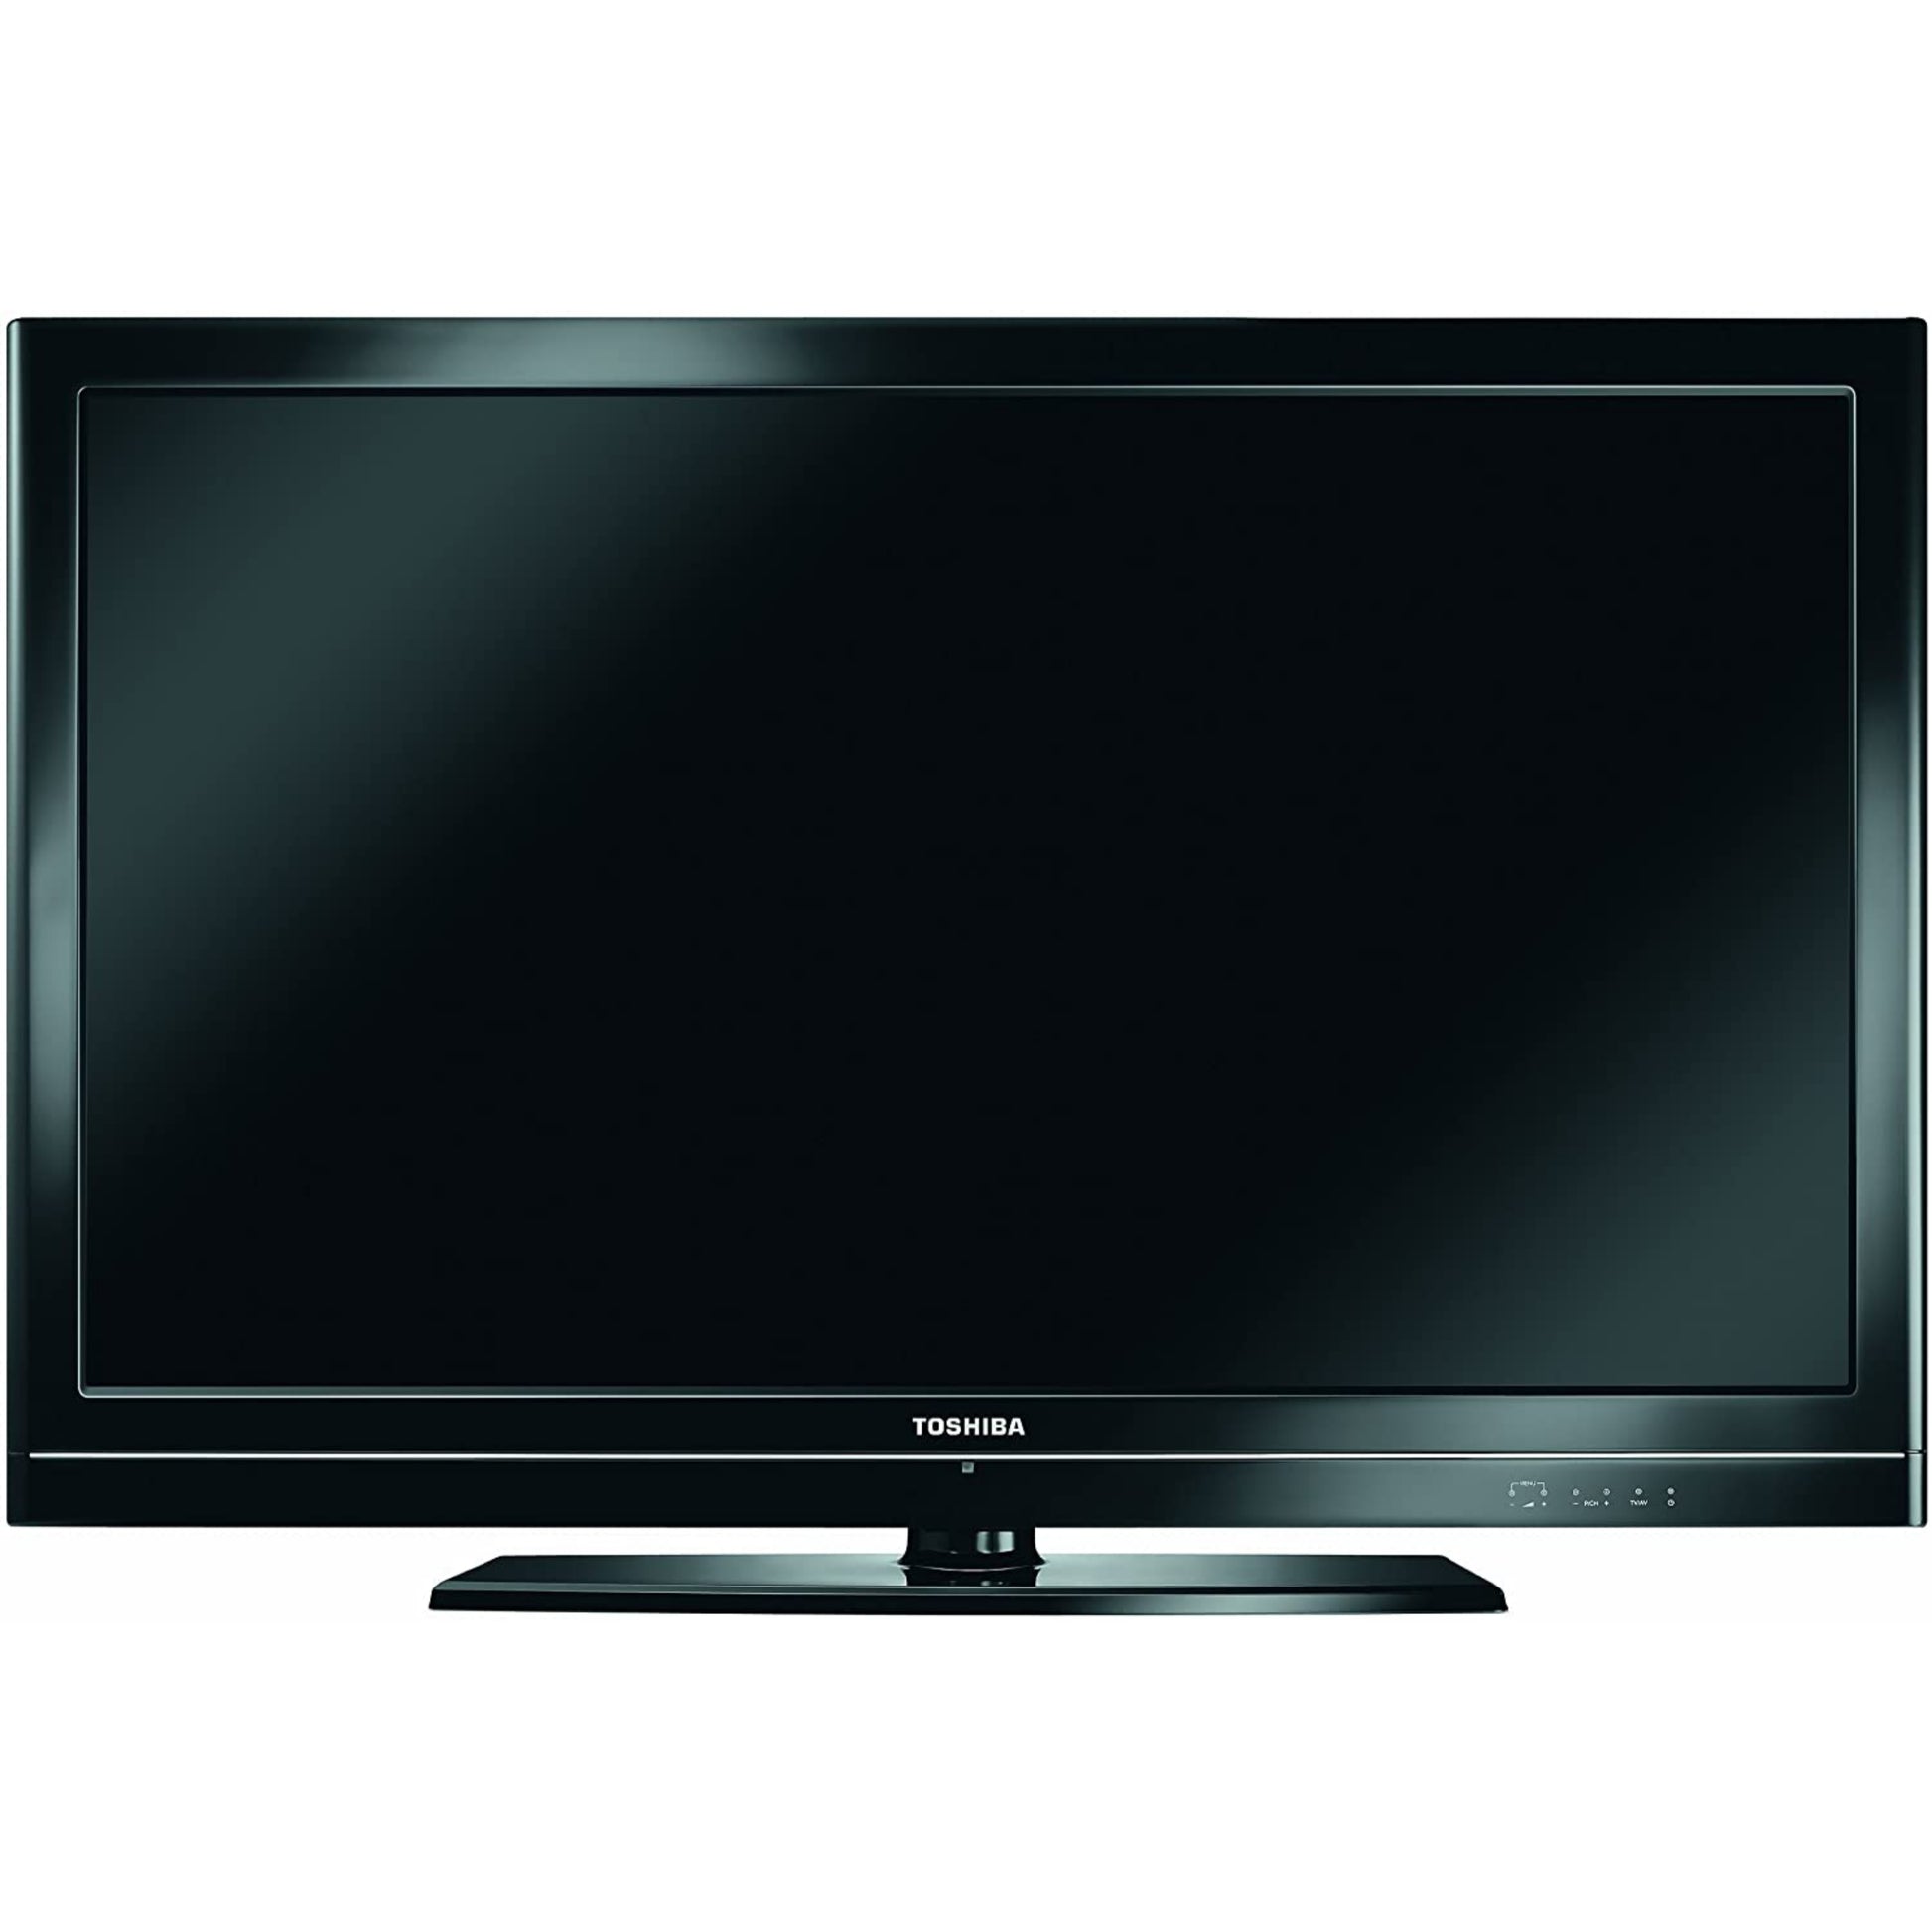 Toshiba TV LCD Colour TV - 40 inch